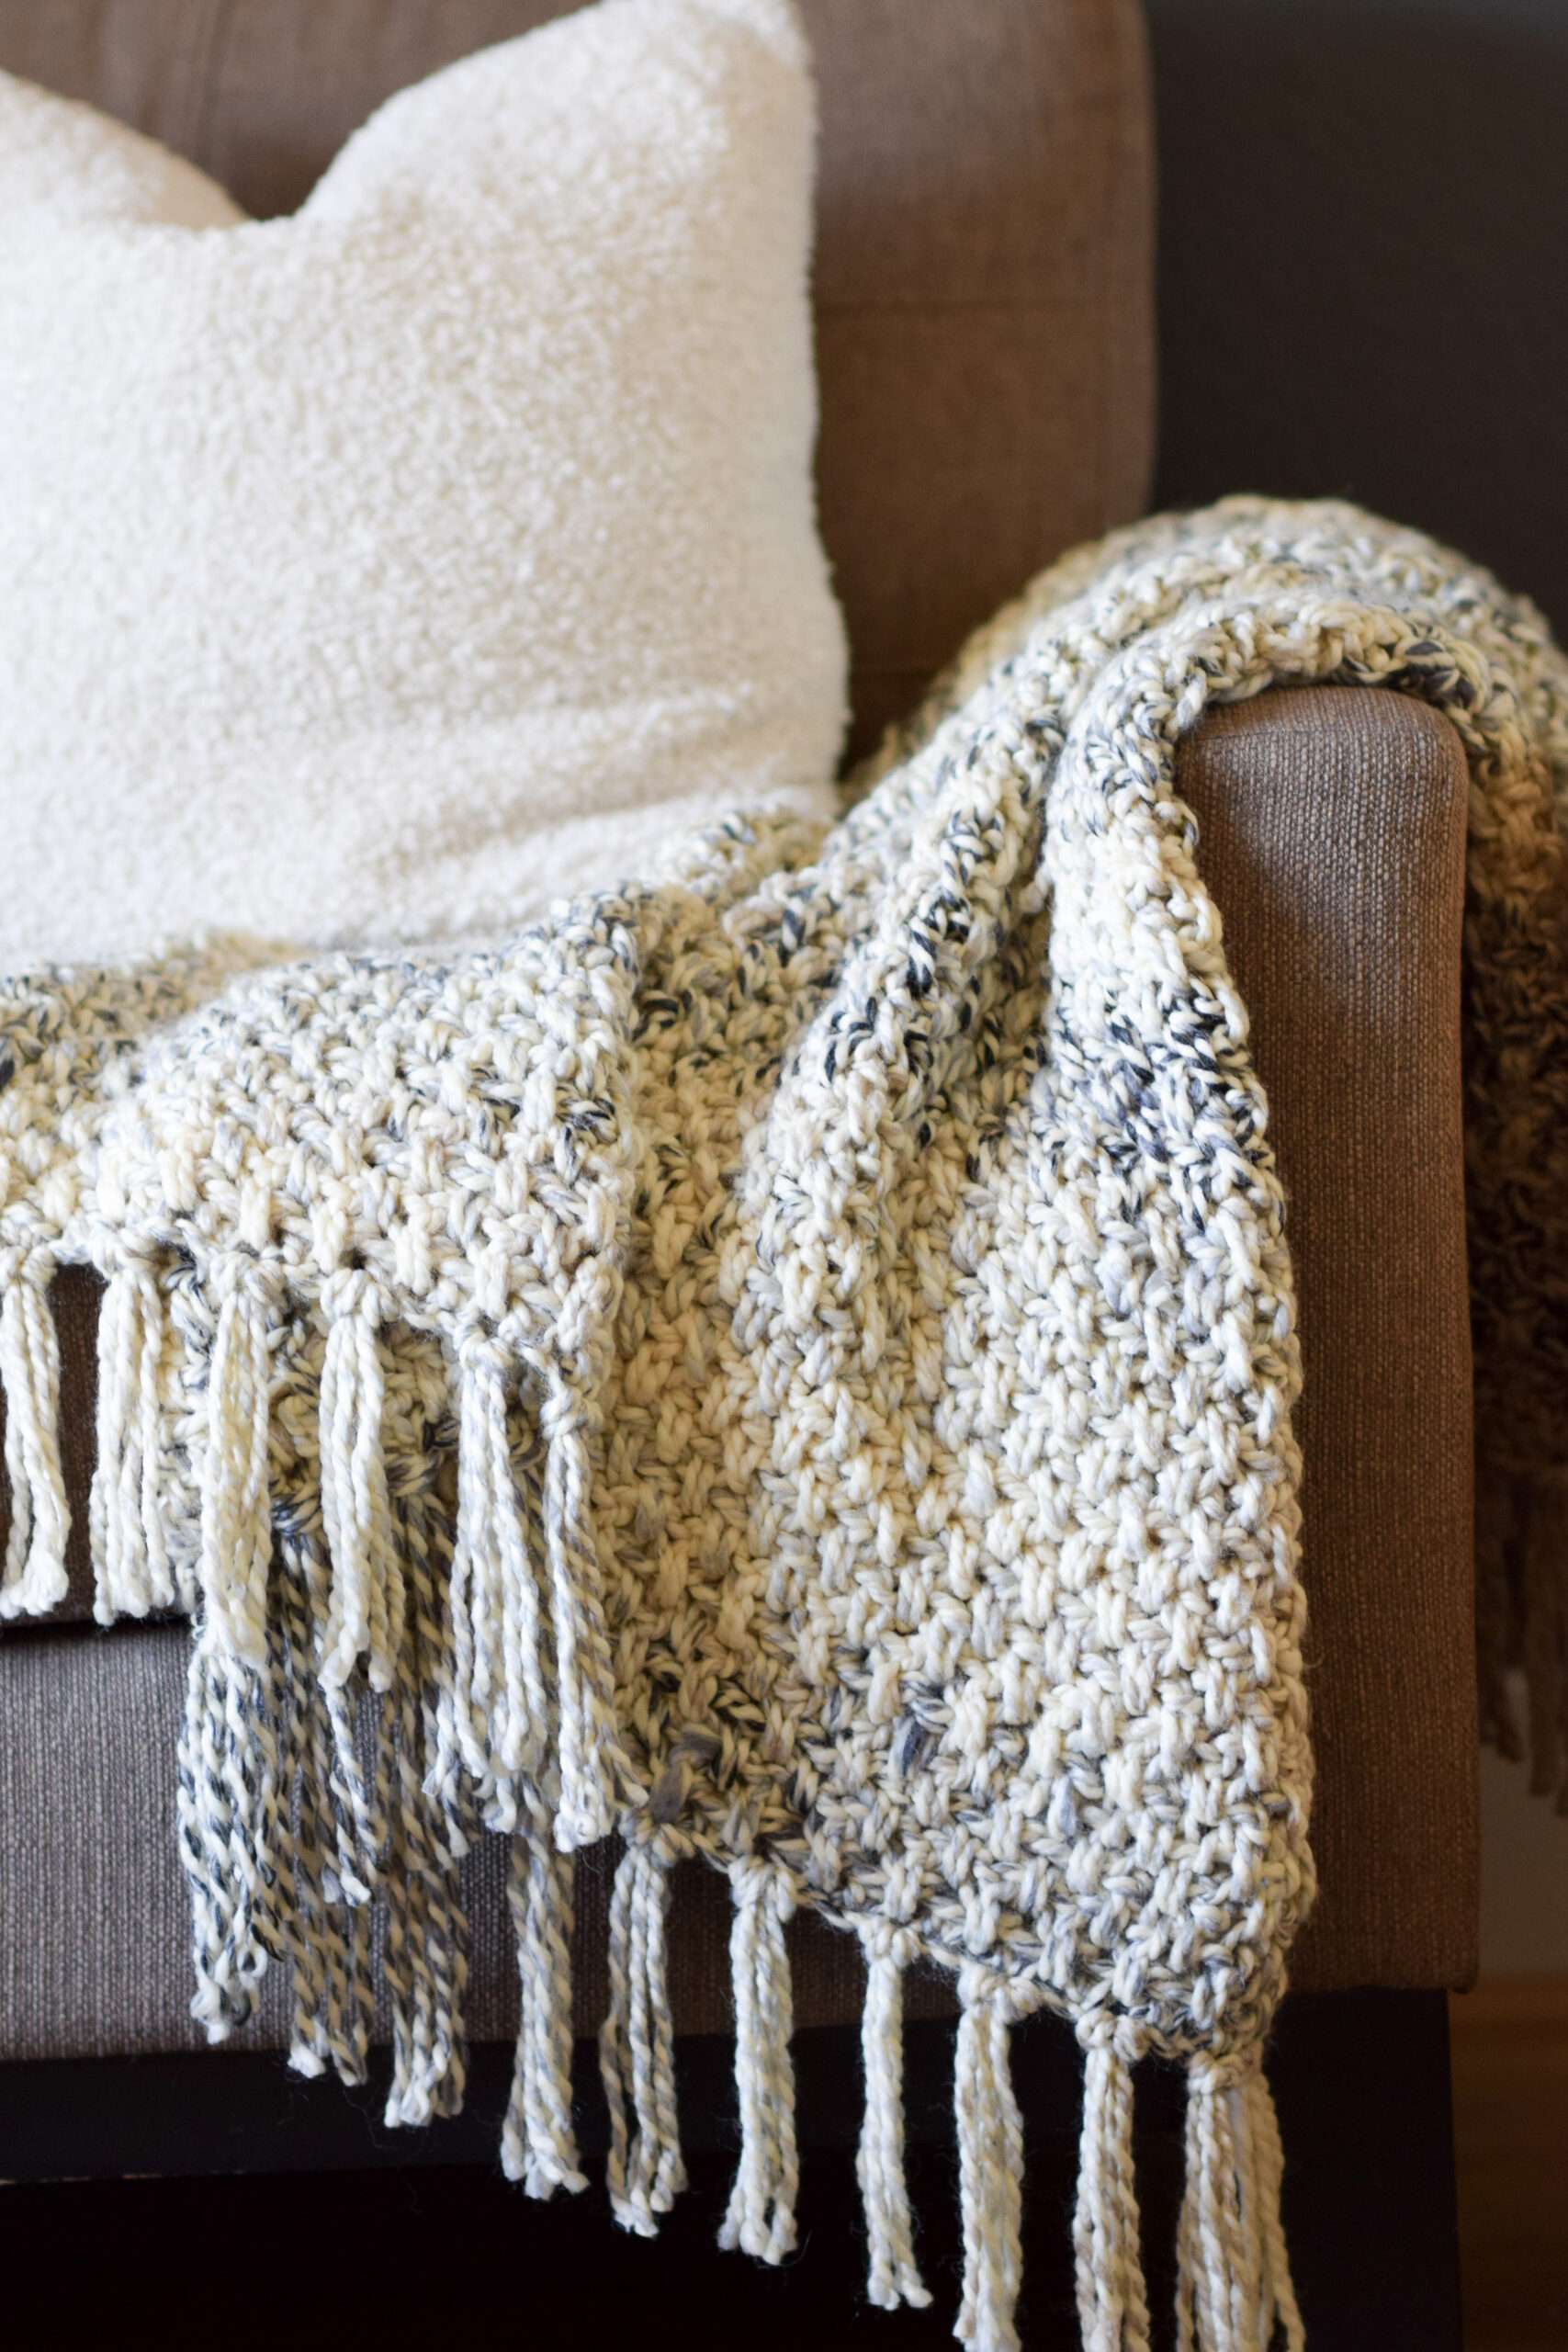 how to make yarn less fuzzy? : r/crochet